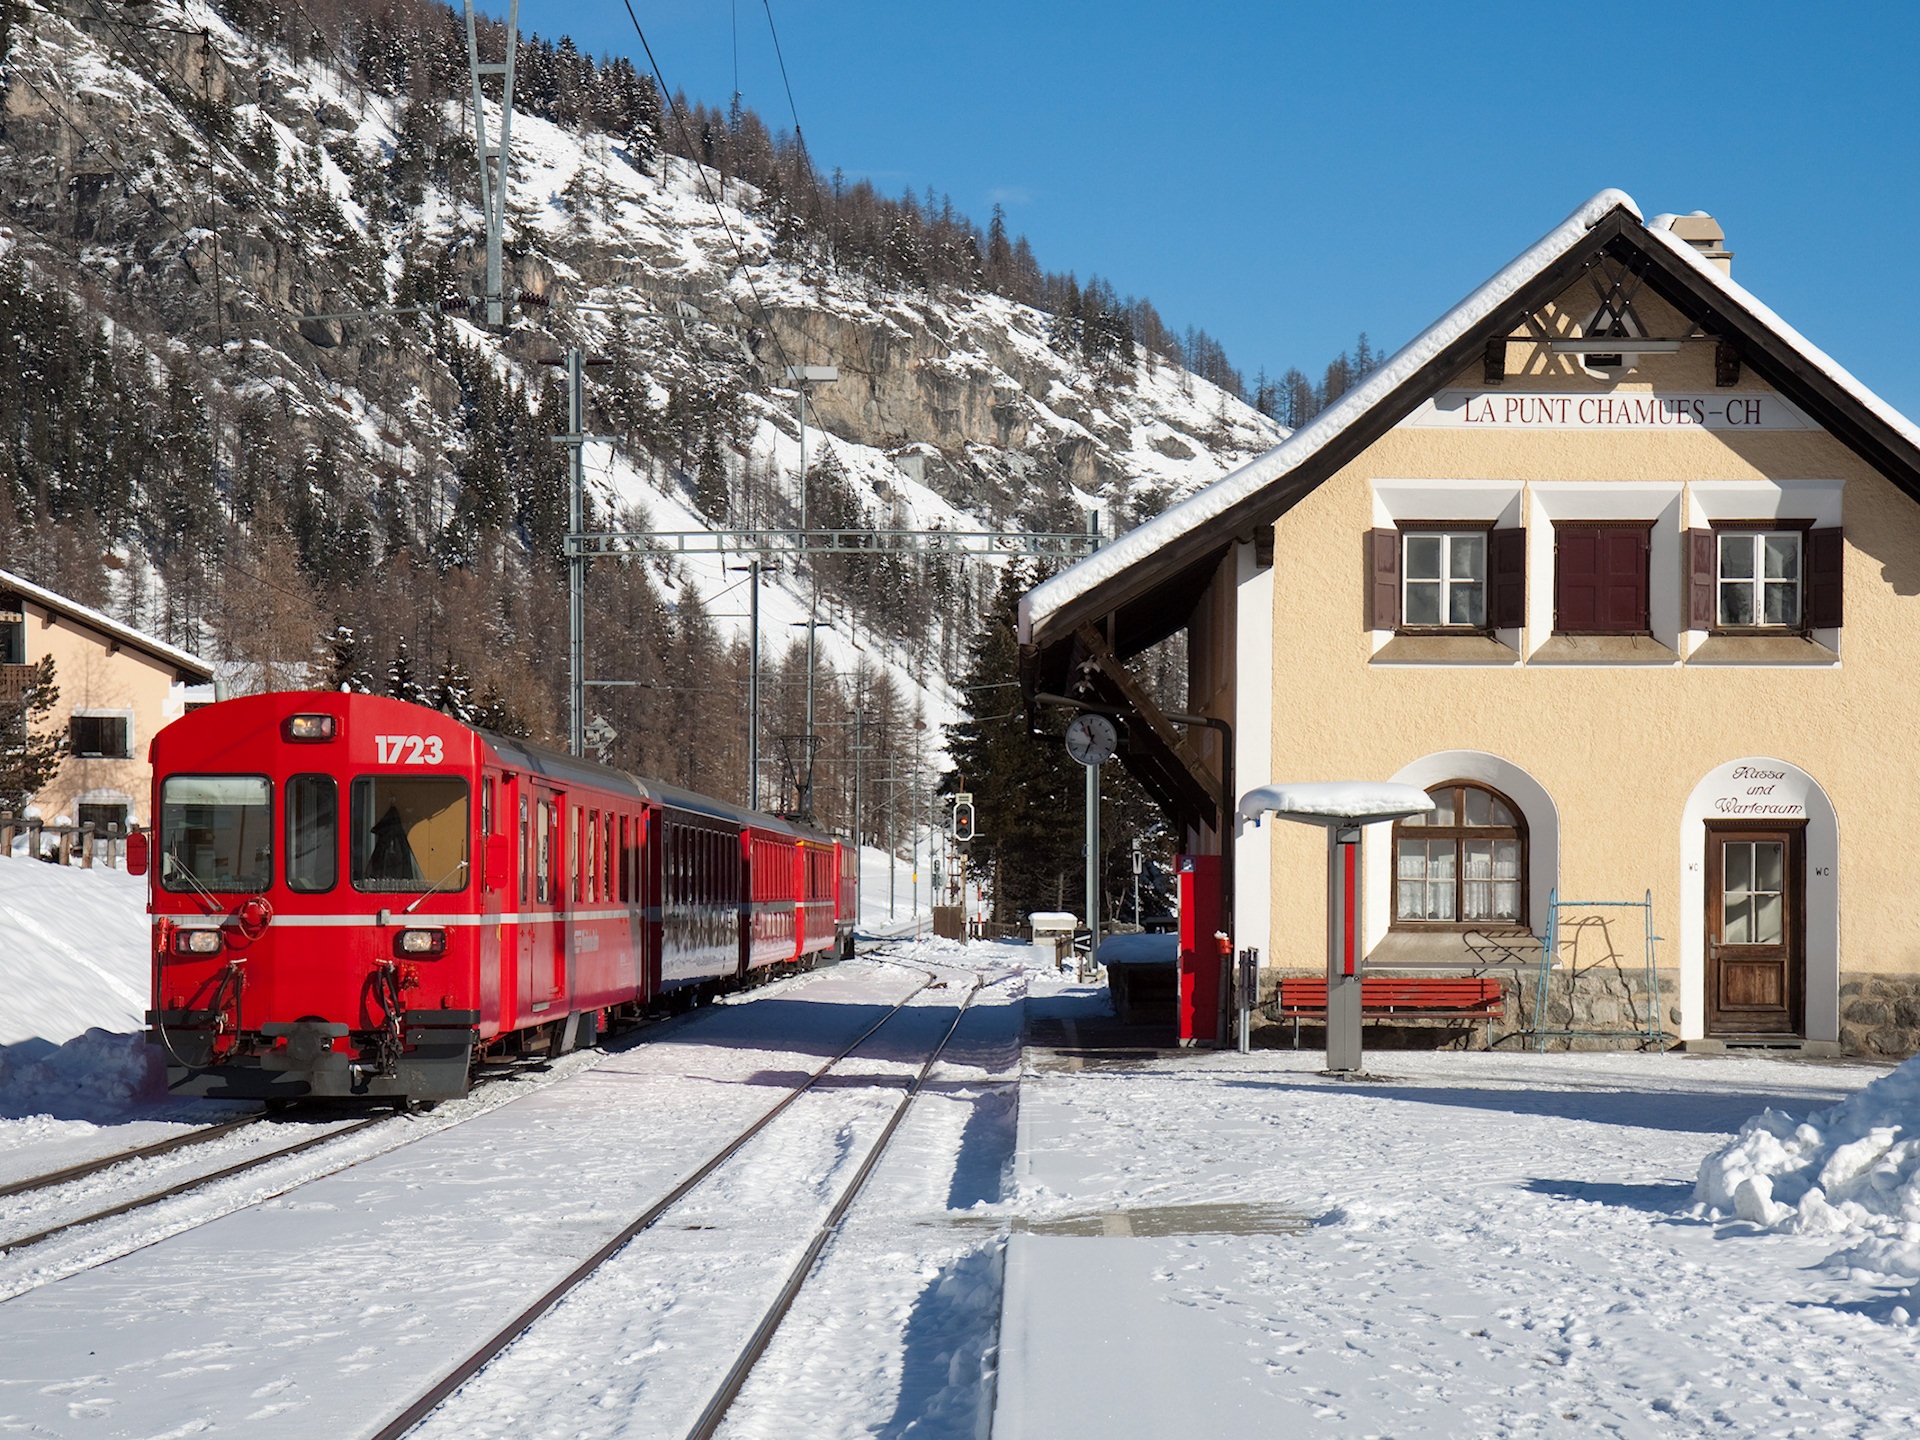 Scenic capture of Rhaetian Railway winding through picturesque landscapes